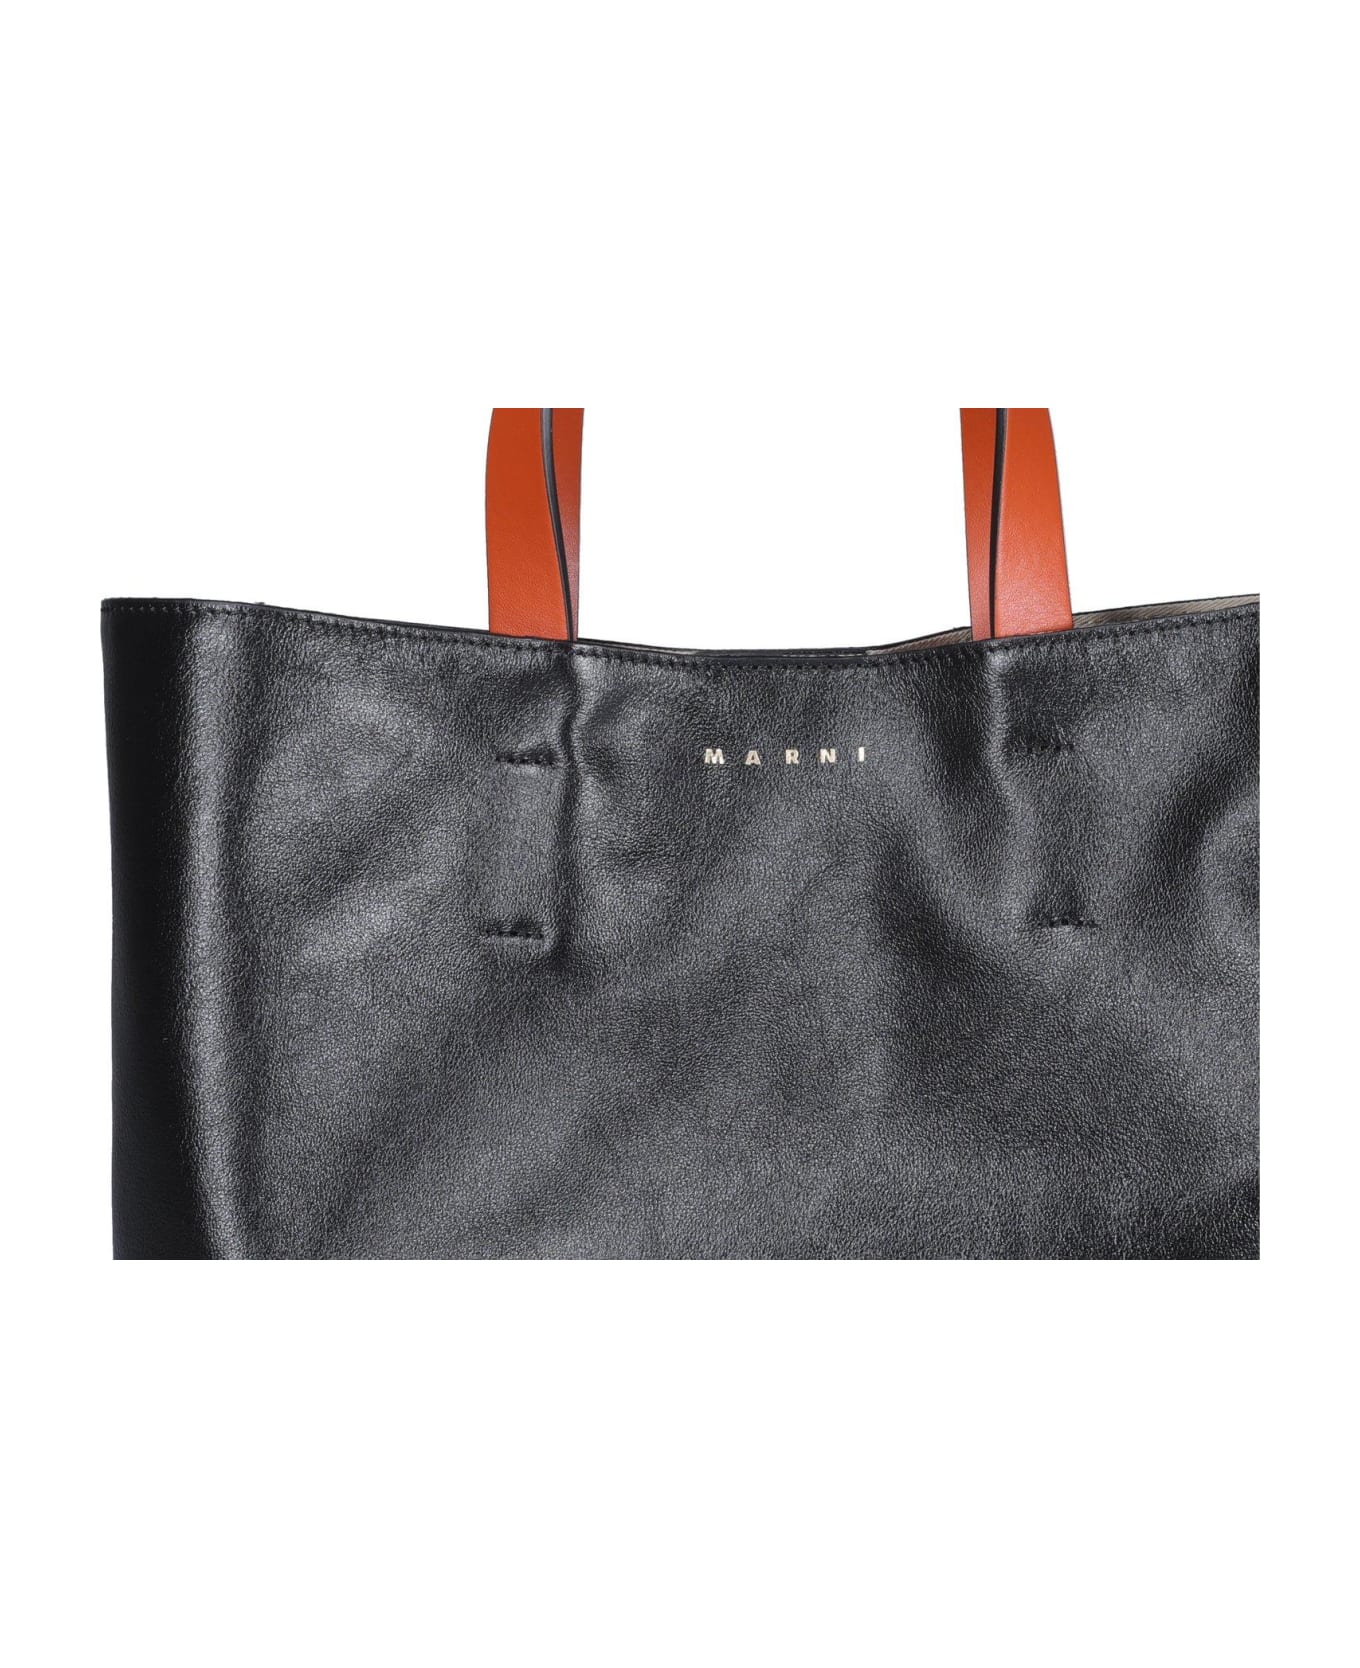 Marni Two-toned Tote Bag - Black/mosstone/tile